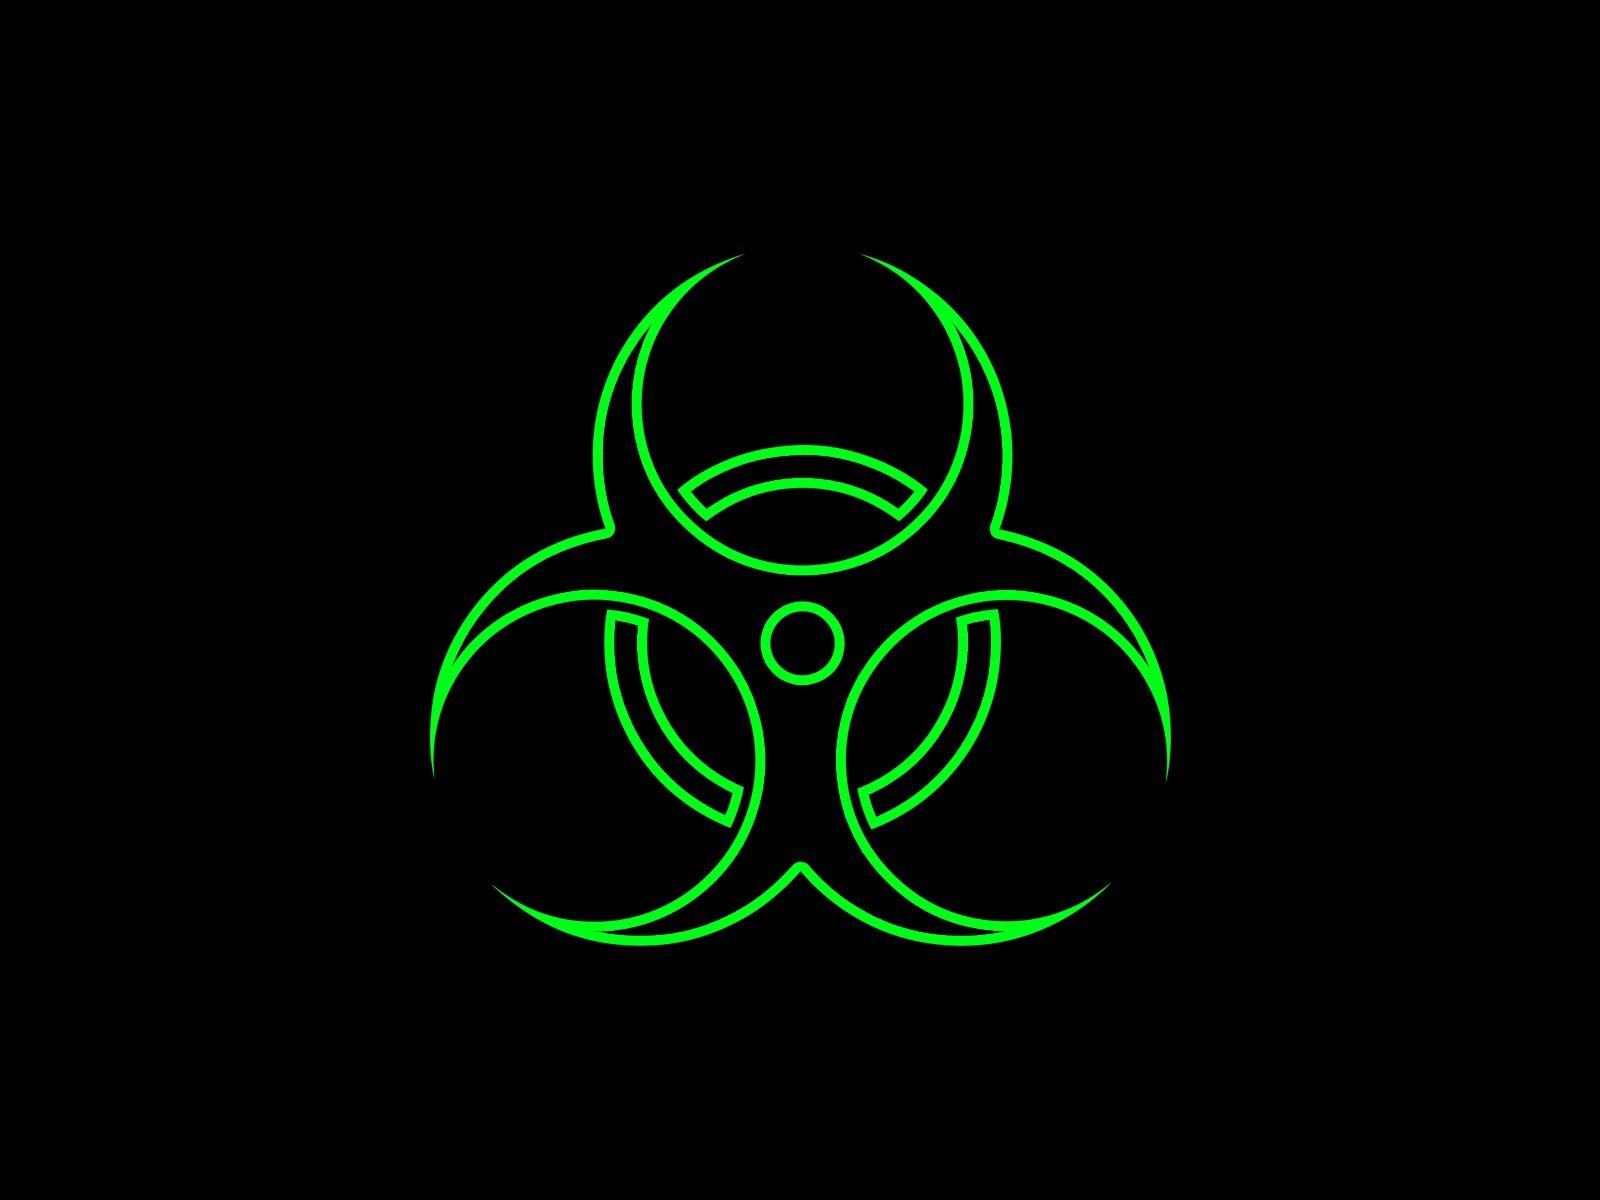 Free download 1600x1200 Toxic Hazard desktop wallpaper and stock